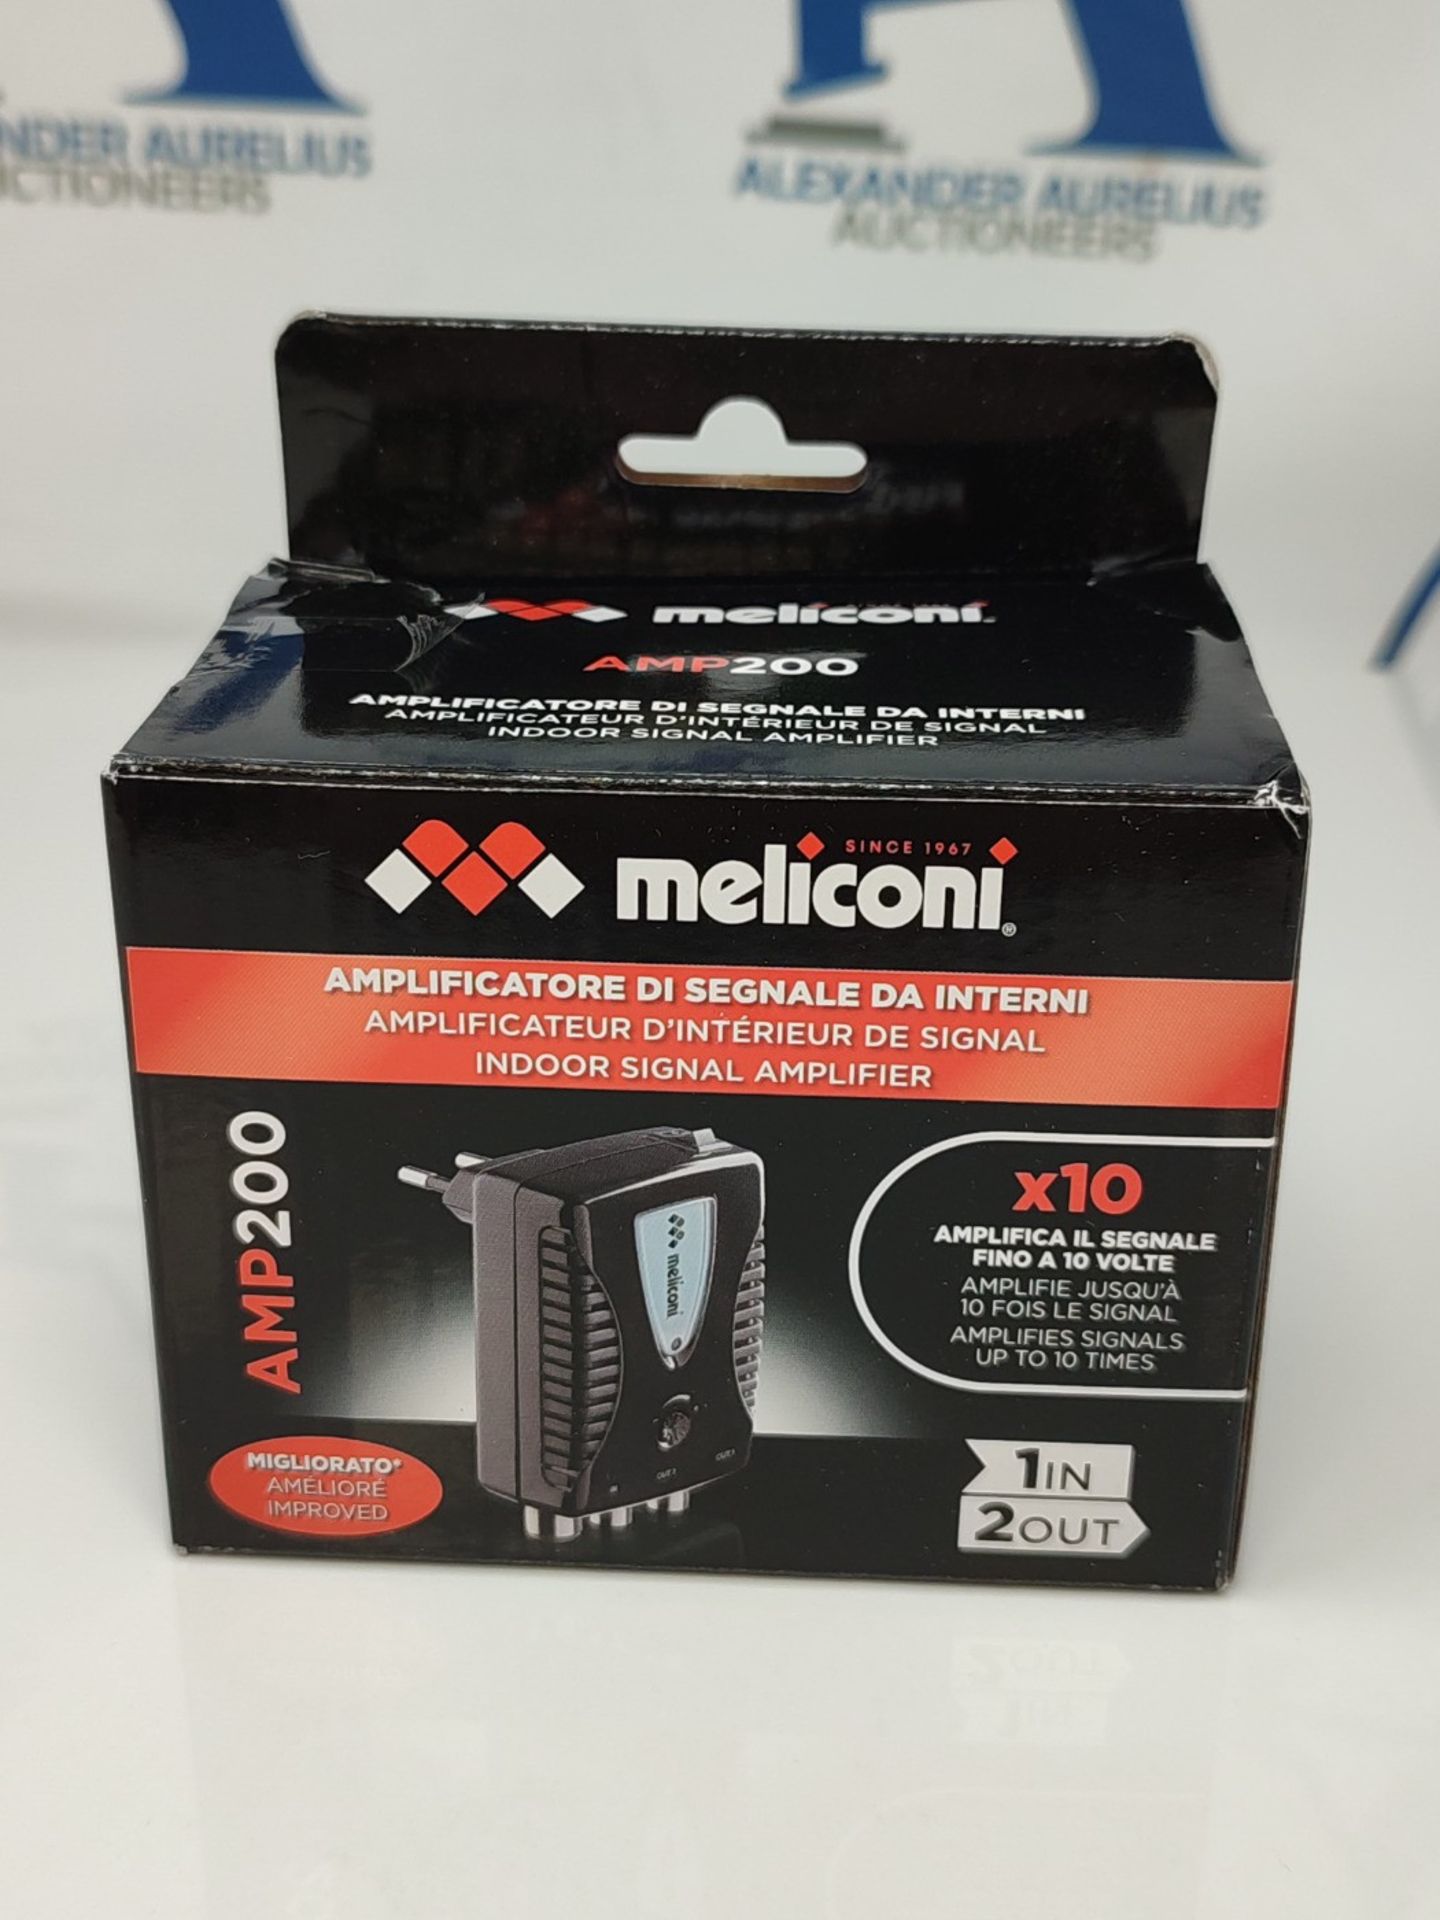 Meliconi AMP200, TV Antenna Amplifier, 2-Way Indoor Digital Signal Amplifier, Direct 2 - Image 2 of 3